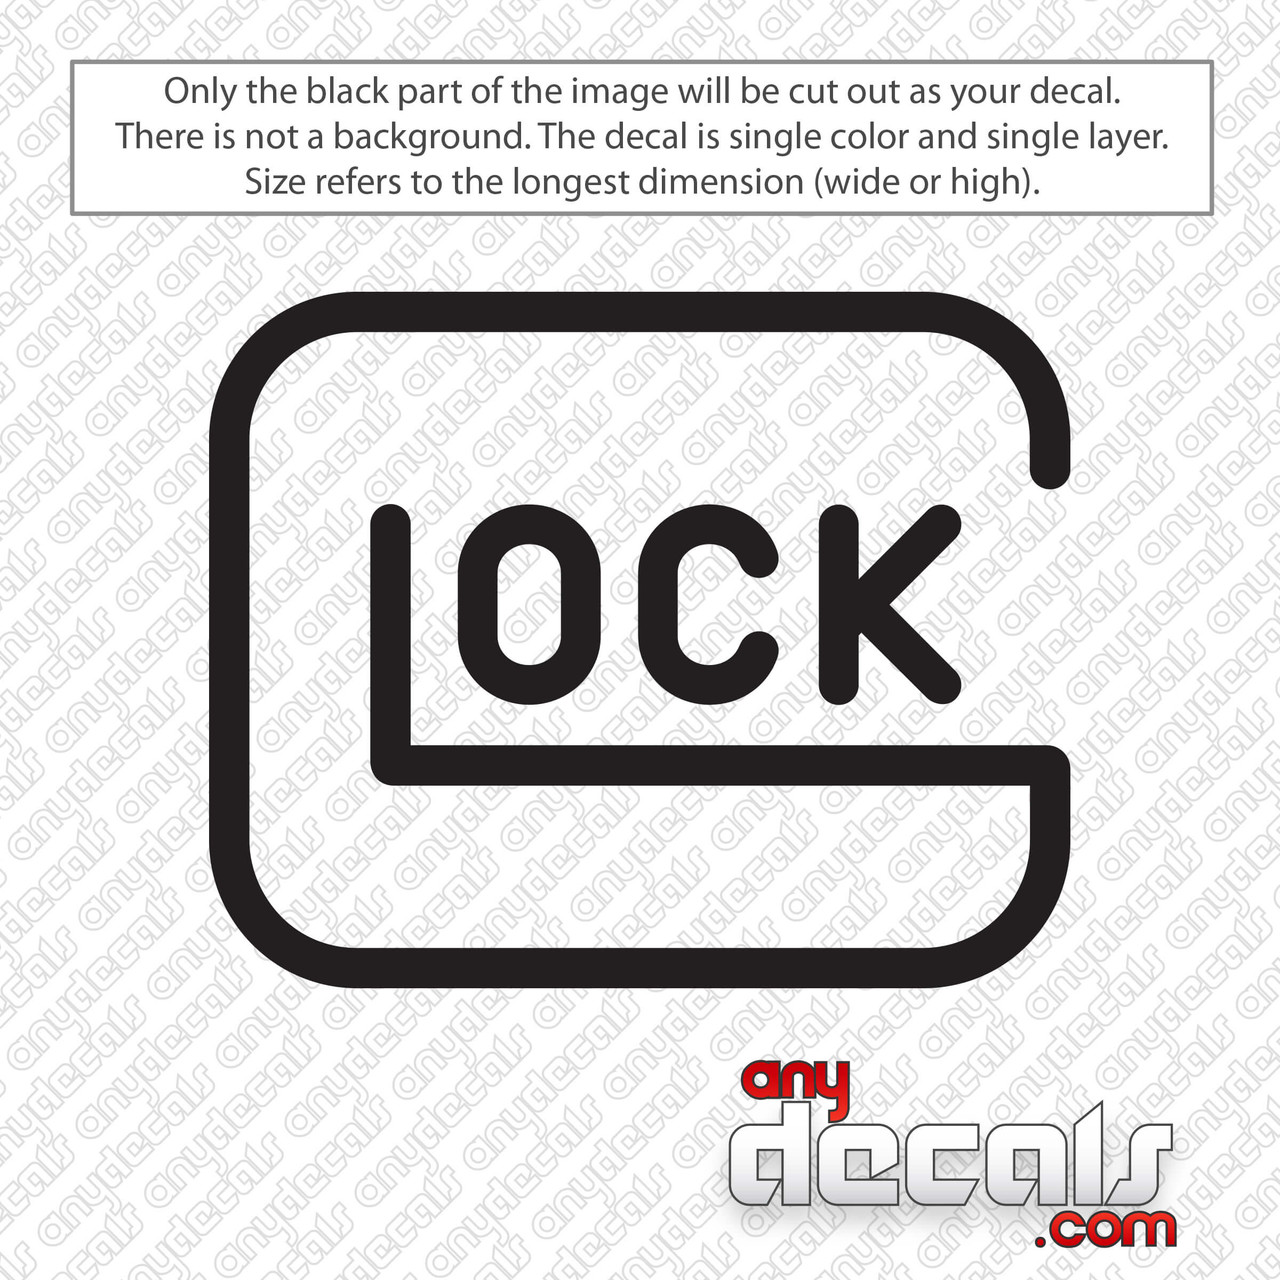 Glock Logo Decal Sticker